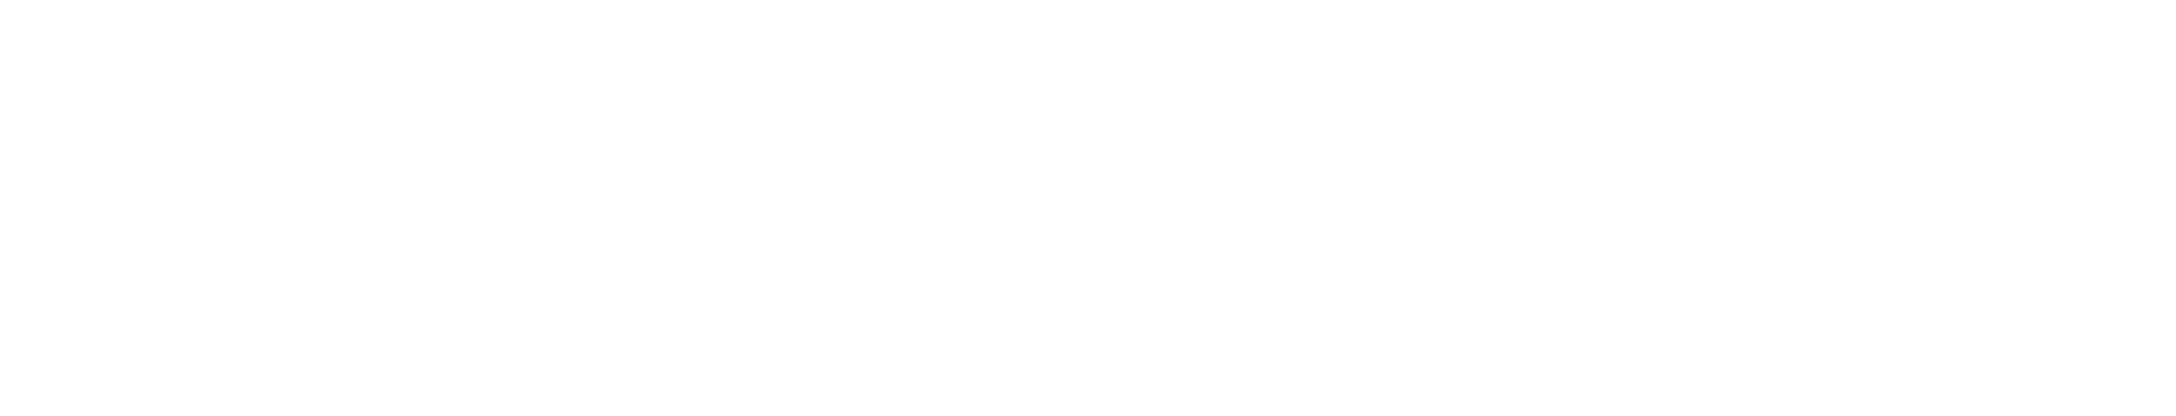 CLI UThealth Co-Branding Logo